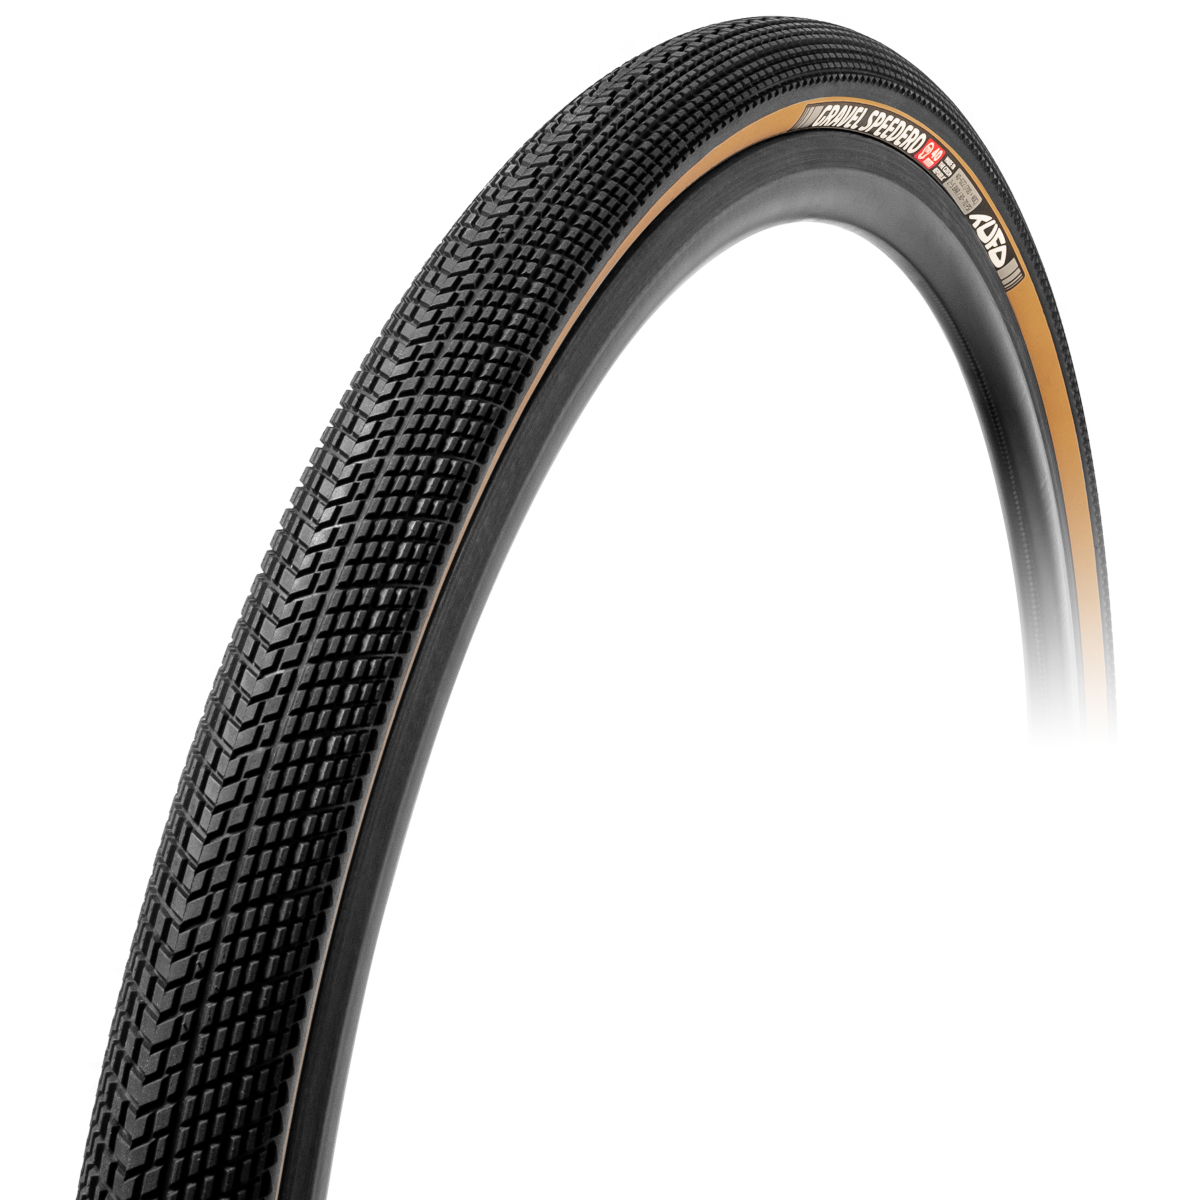 Productfoto van Tufo Gravel Speedero Folding Tire - 44-622 - black/tan